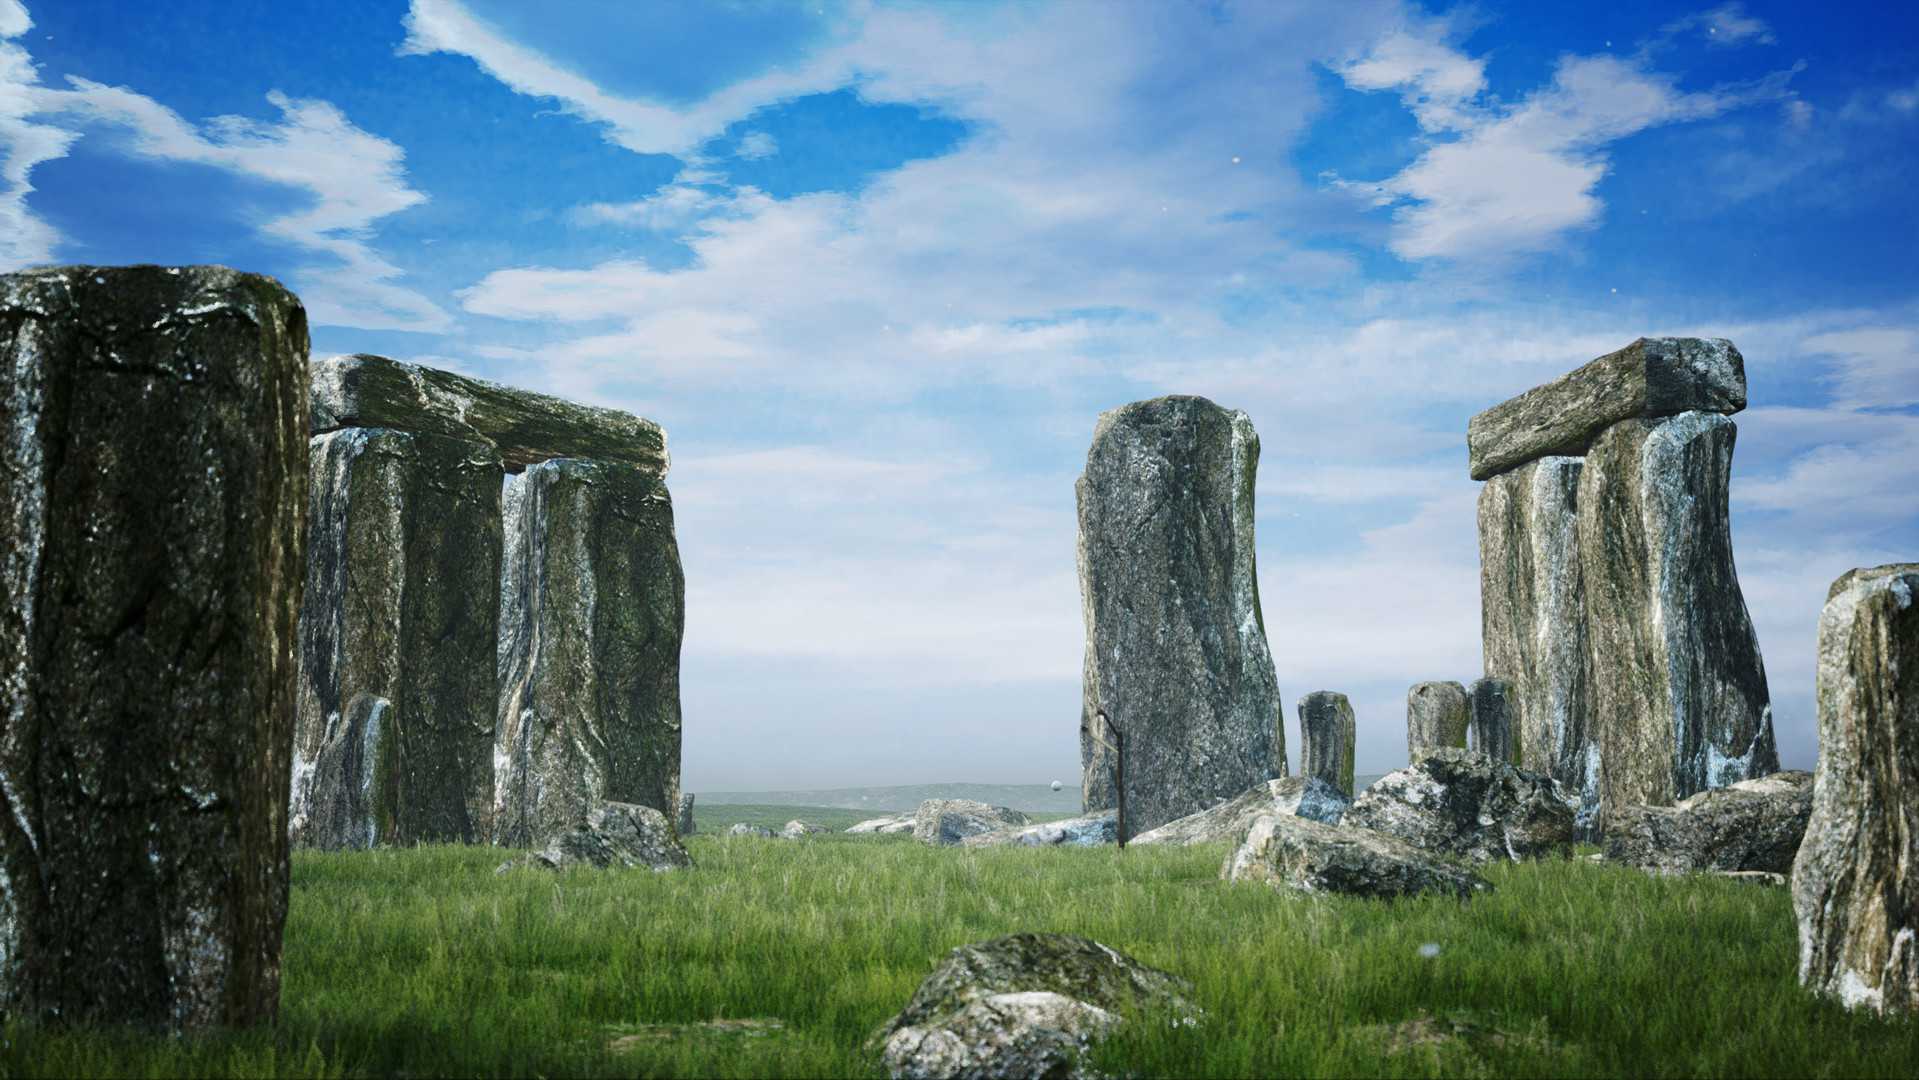 Stonehenge VR